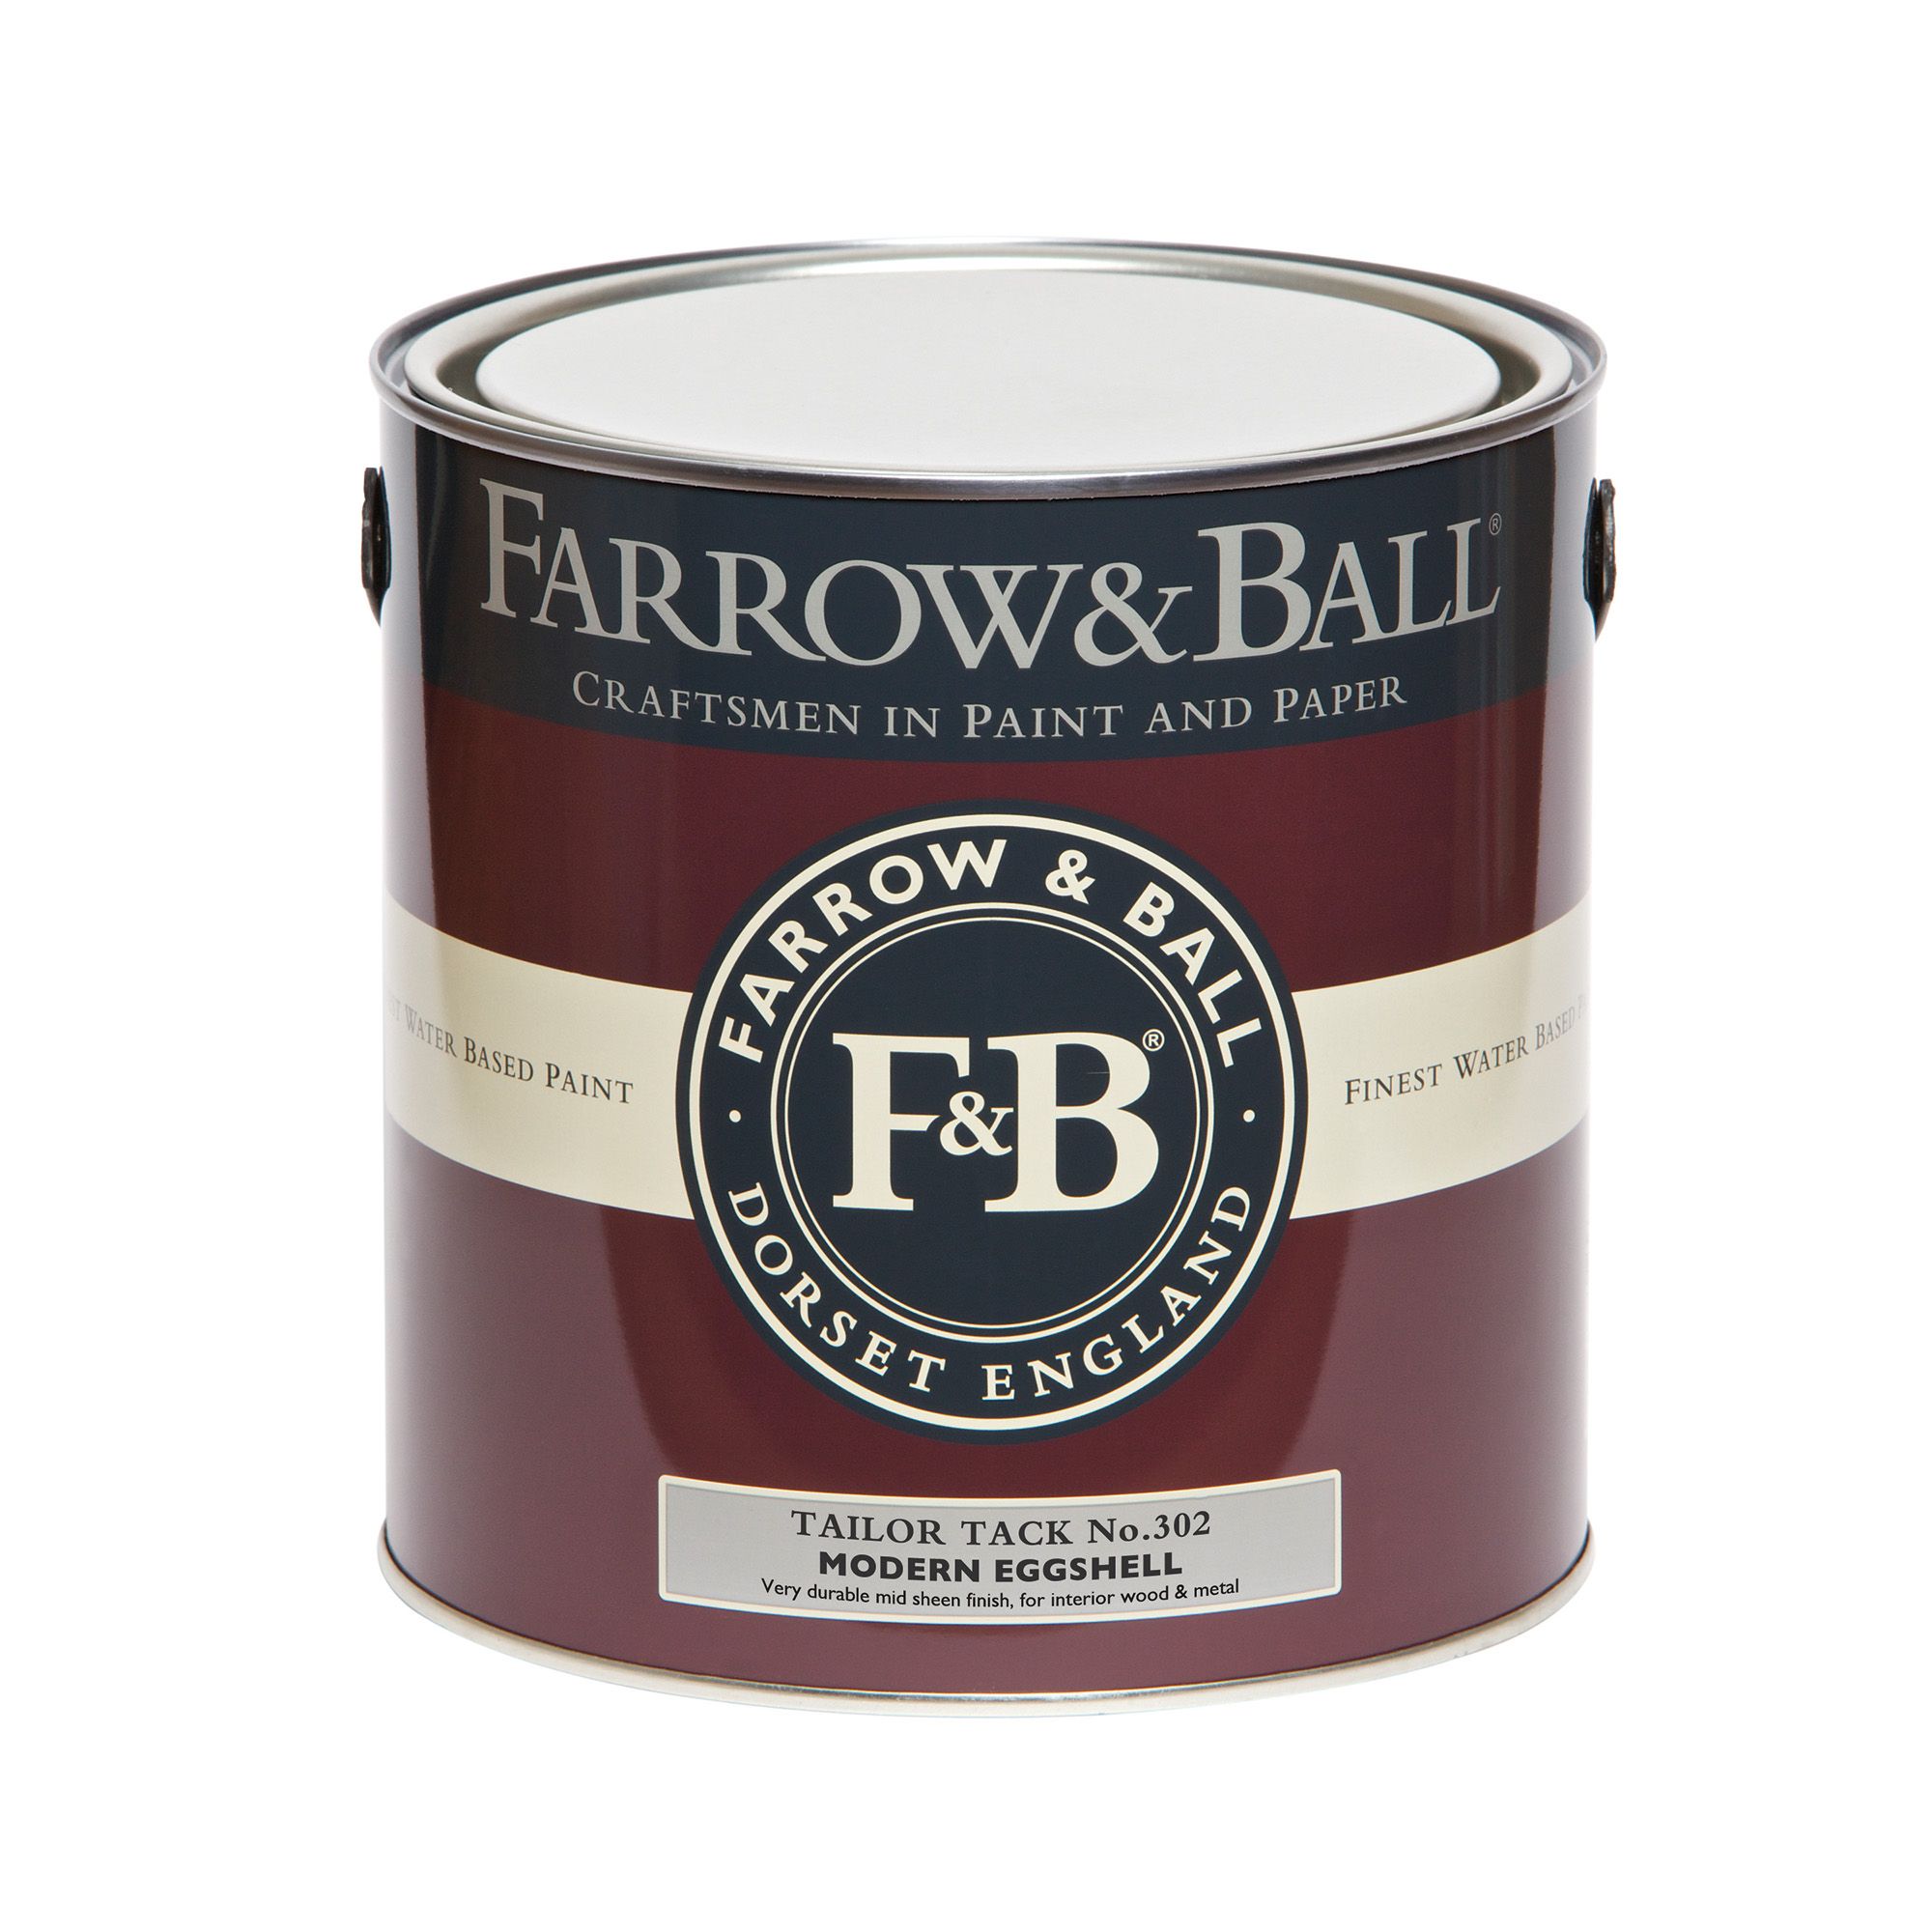 Farrow & Ball Modern Tailor Tack No.302 Eggshell Paint, 2.5L